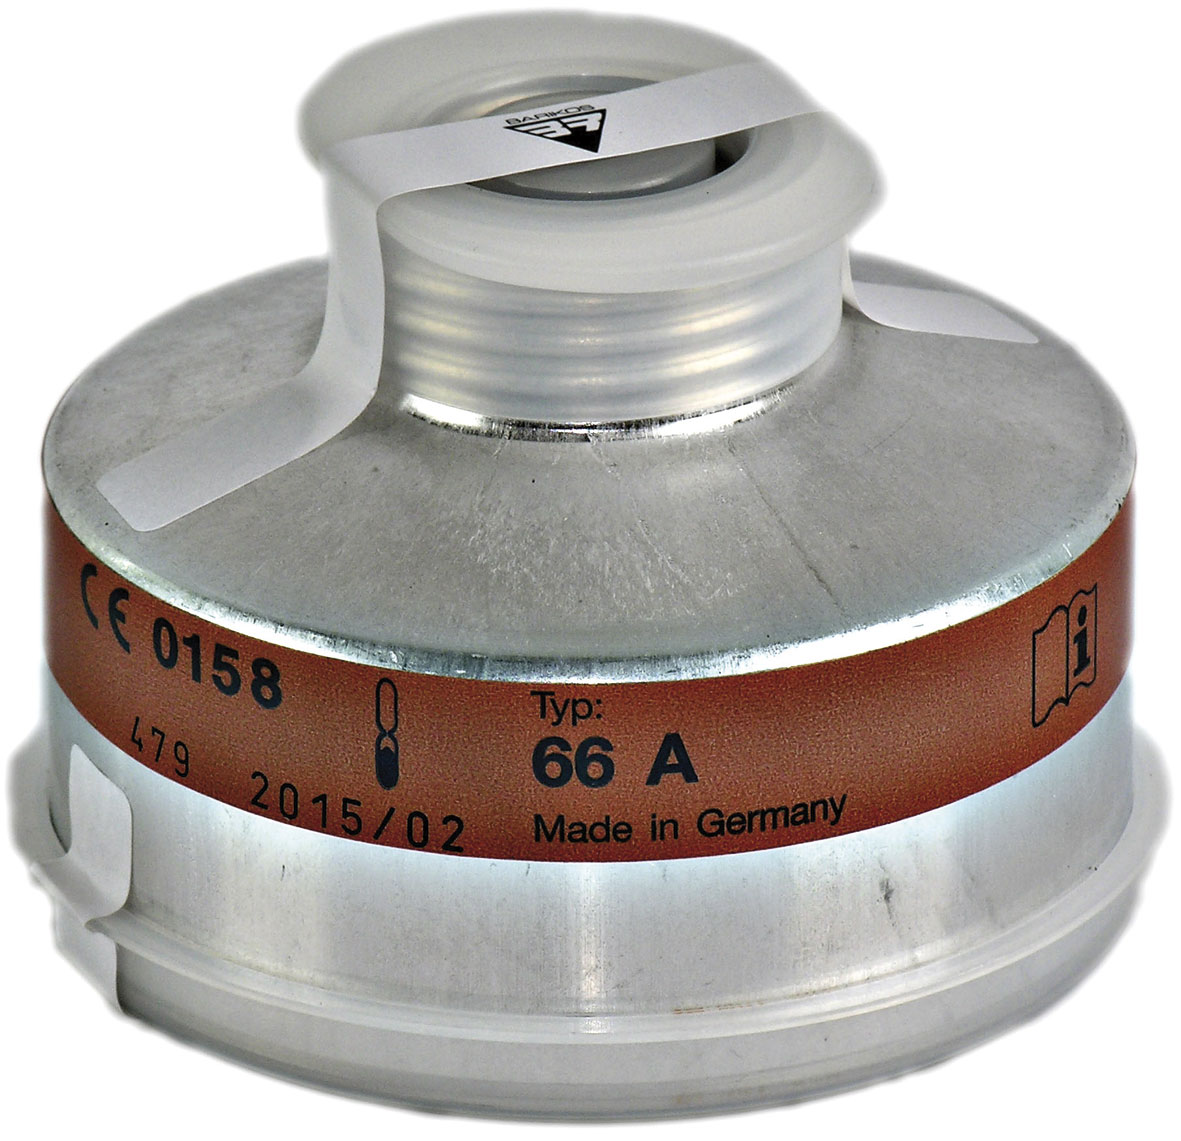 Filtro respiratorio rosca para gases y vapores orgánicos p.e.&gt;65º y partículas tóxicas. Clase protección: A2-P3. BARIKOS